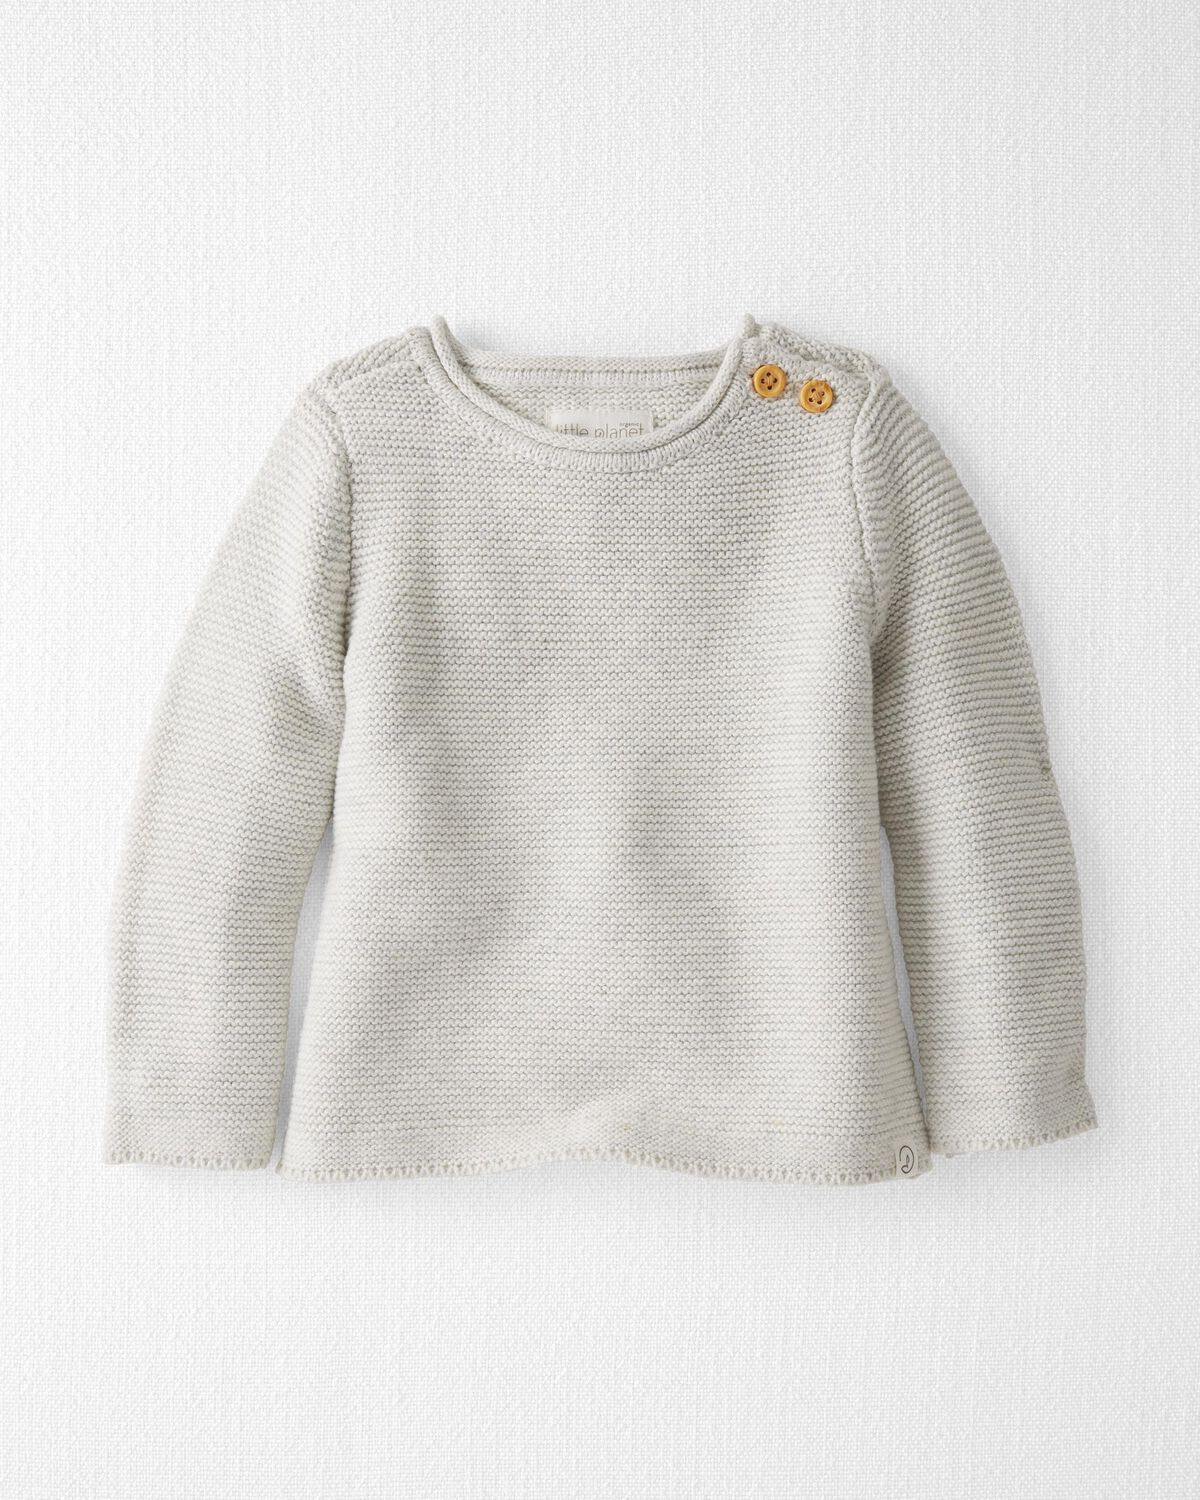 Oatmeal Baby Organic Cotton Knit Sweater | carters.com | Carter's